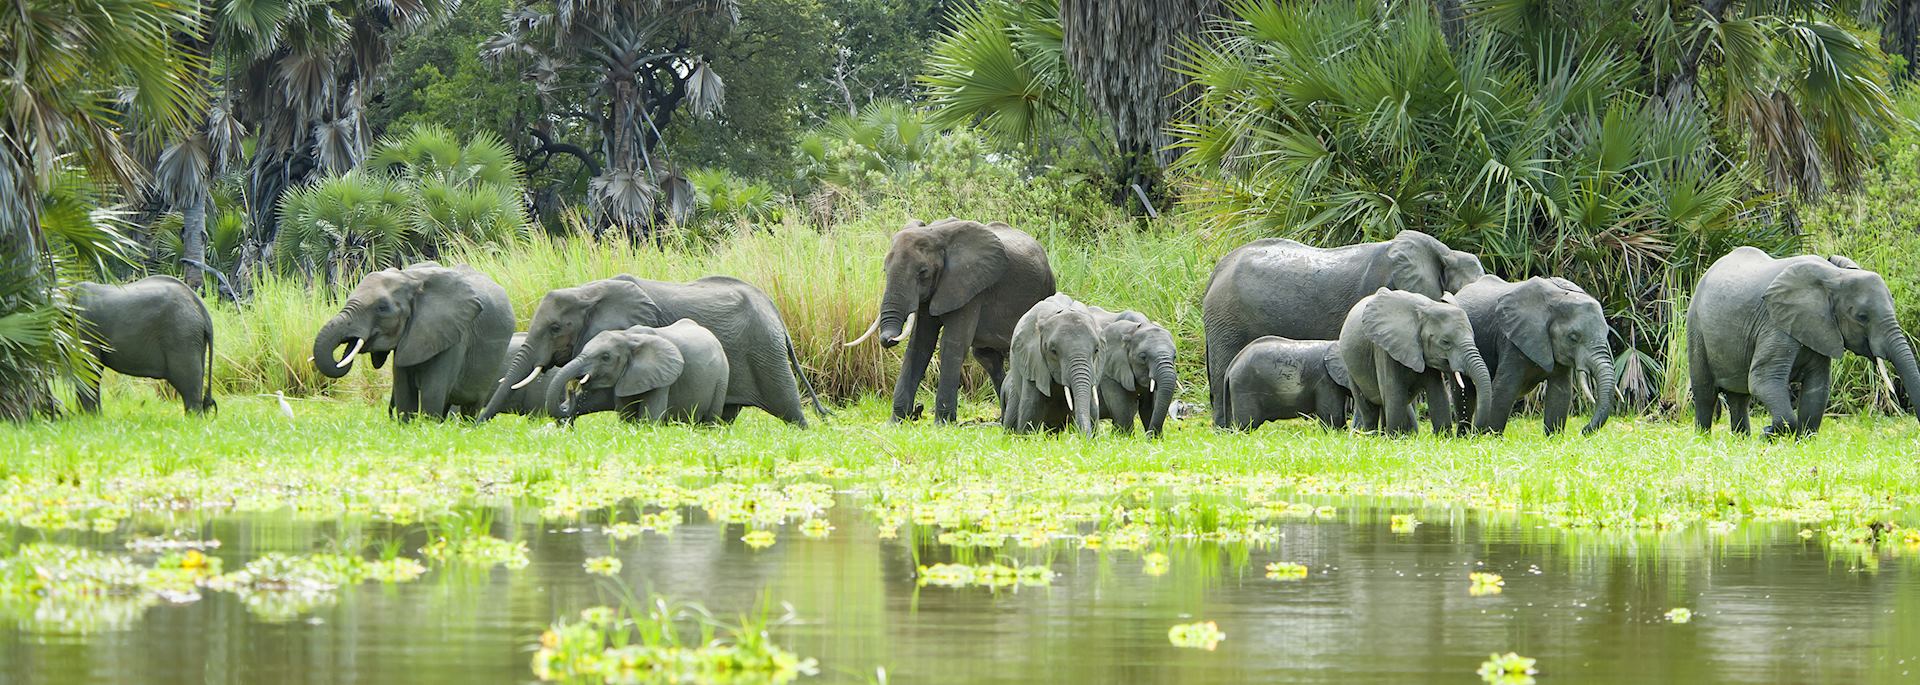 Selous Game Reserve, Tanzania